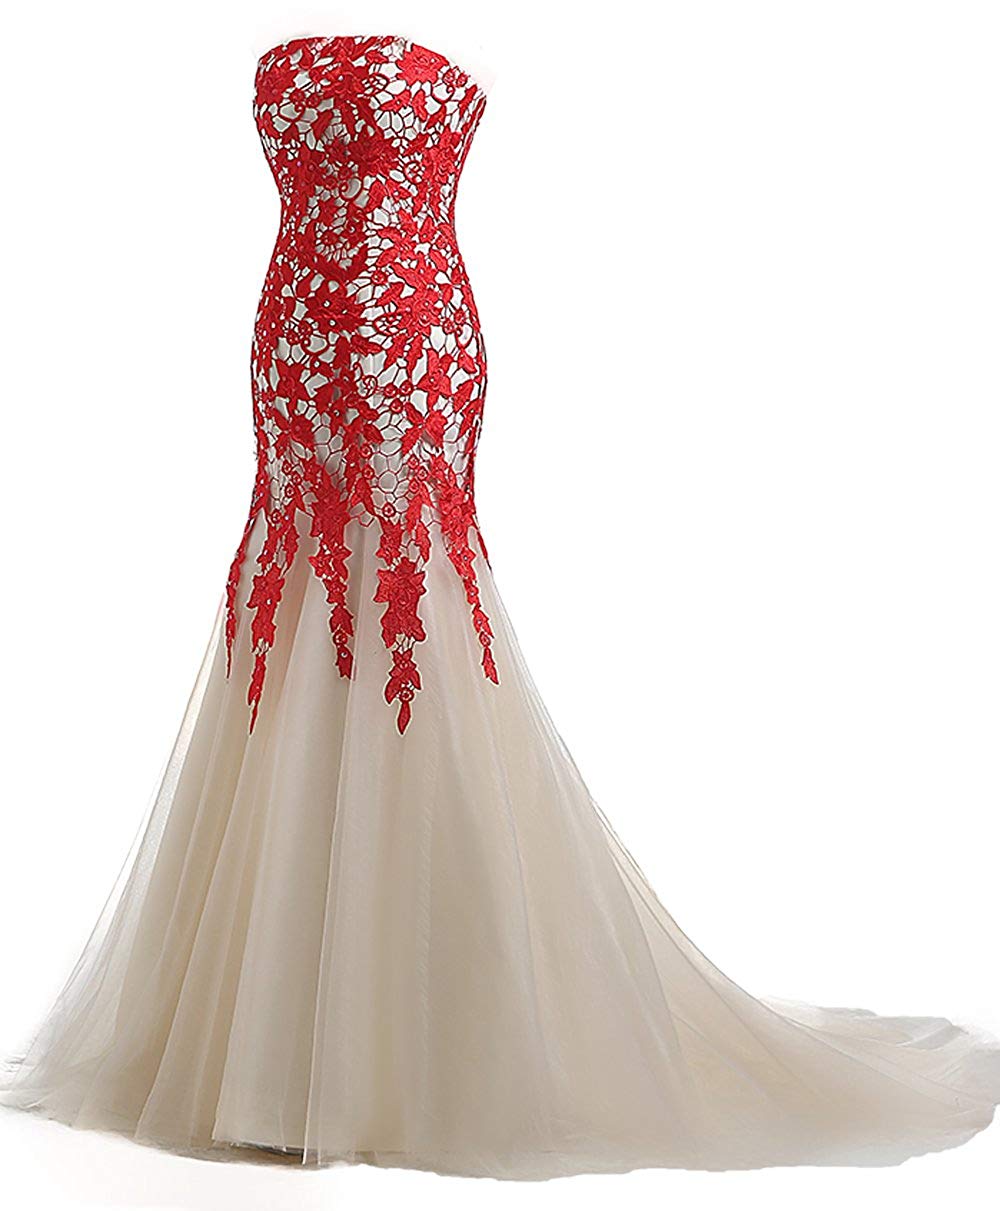 wedding dress red white